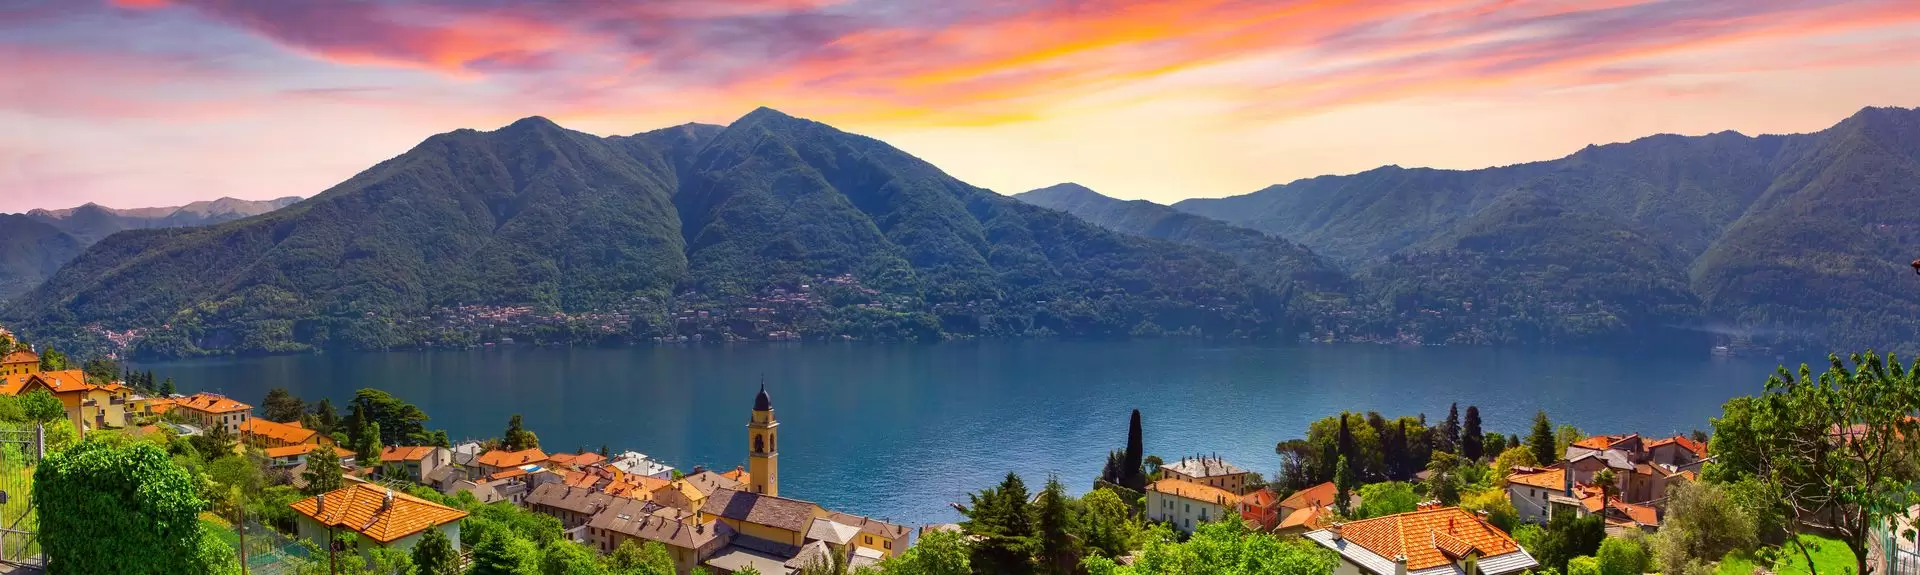 Italia - Lombardia, 5 dintre Marile Lacuri și Cinque Terre